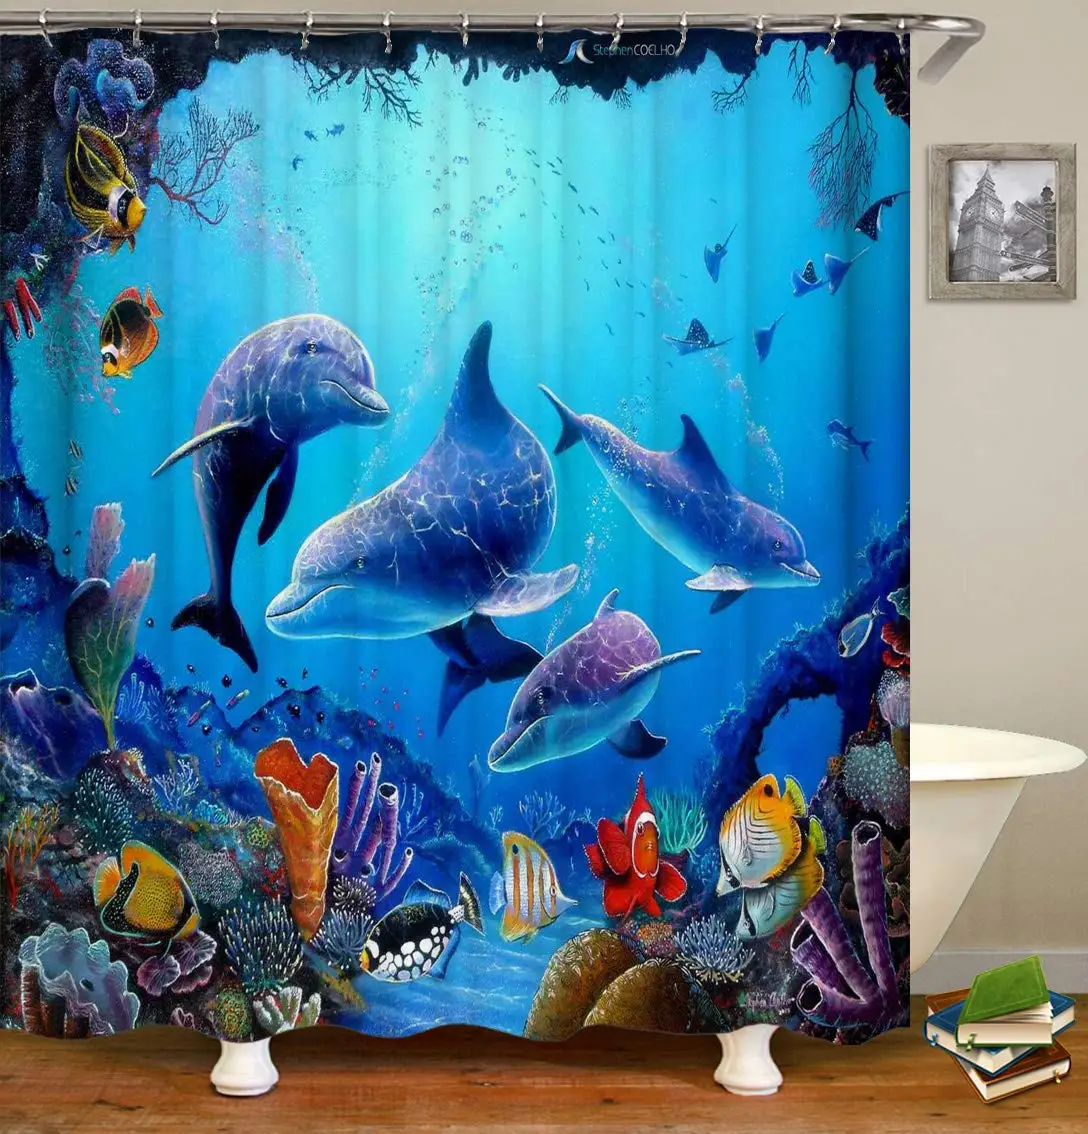 

Dolphin Shower Curtain, Blue Underwater World Marine Life,Polyester Fabric Kids Ocean Theme Bathroom Decor Set with 12 Hooks